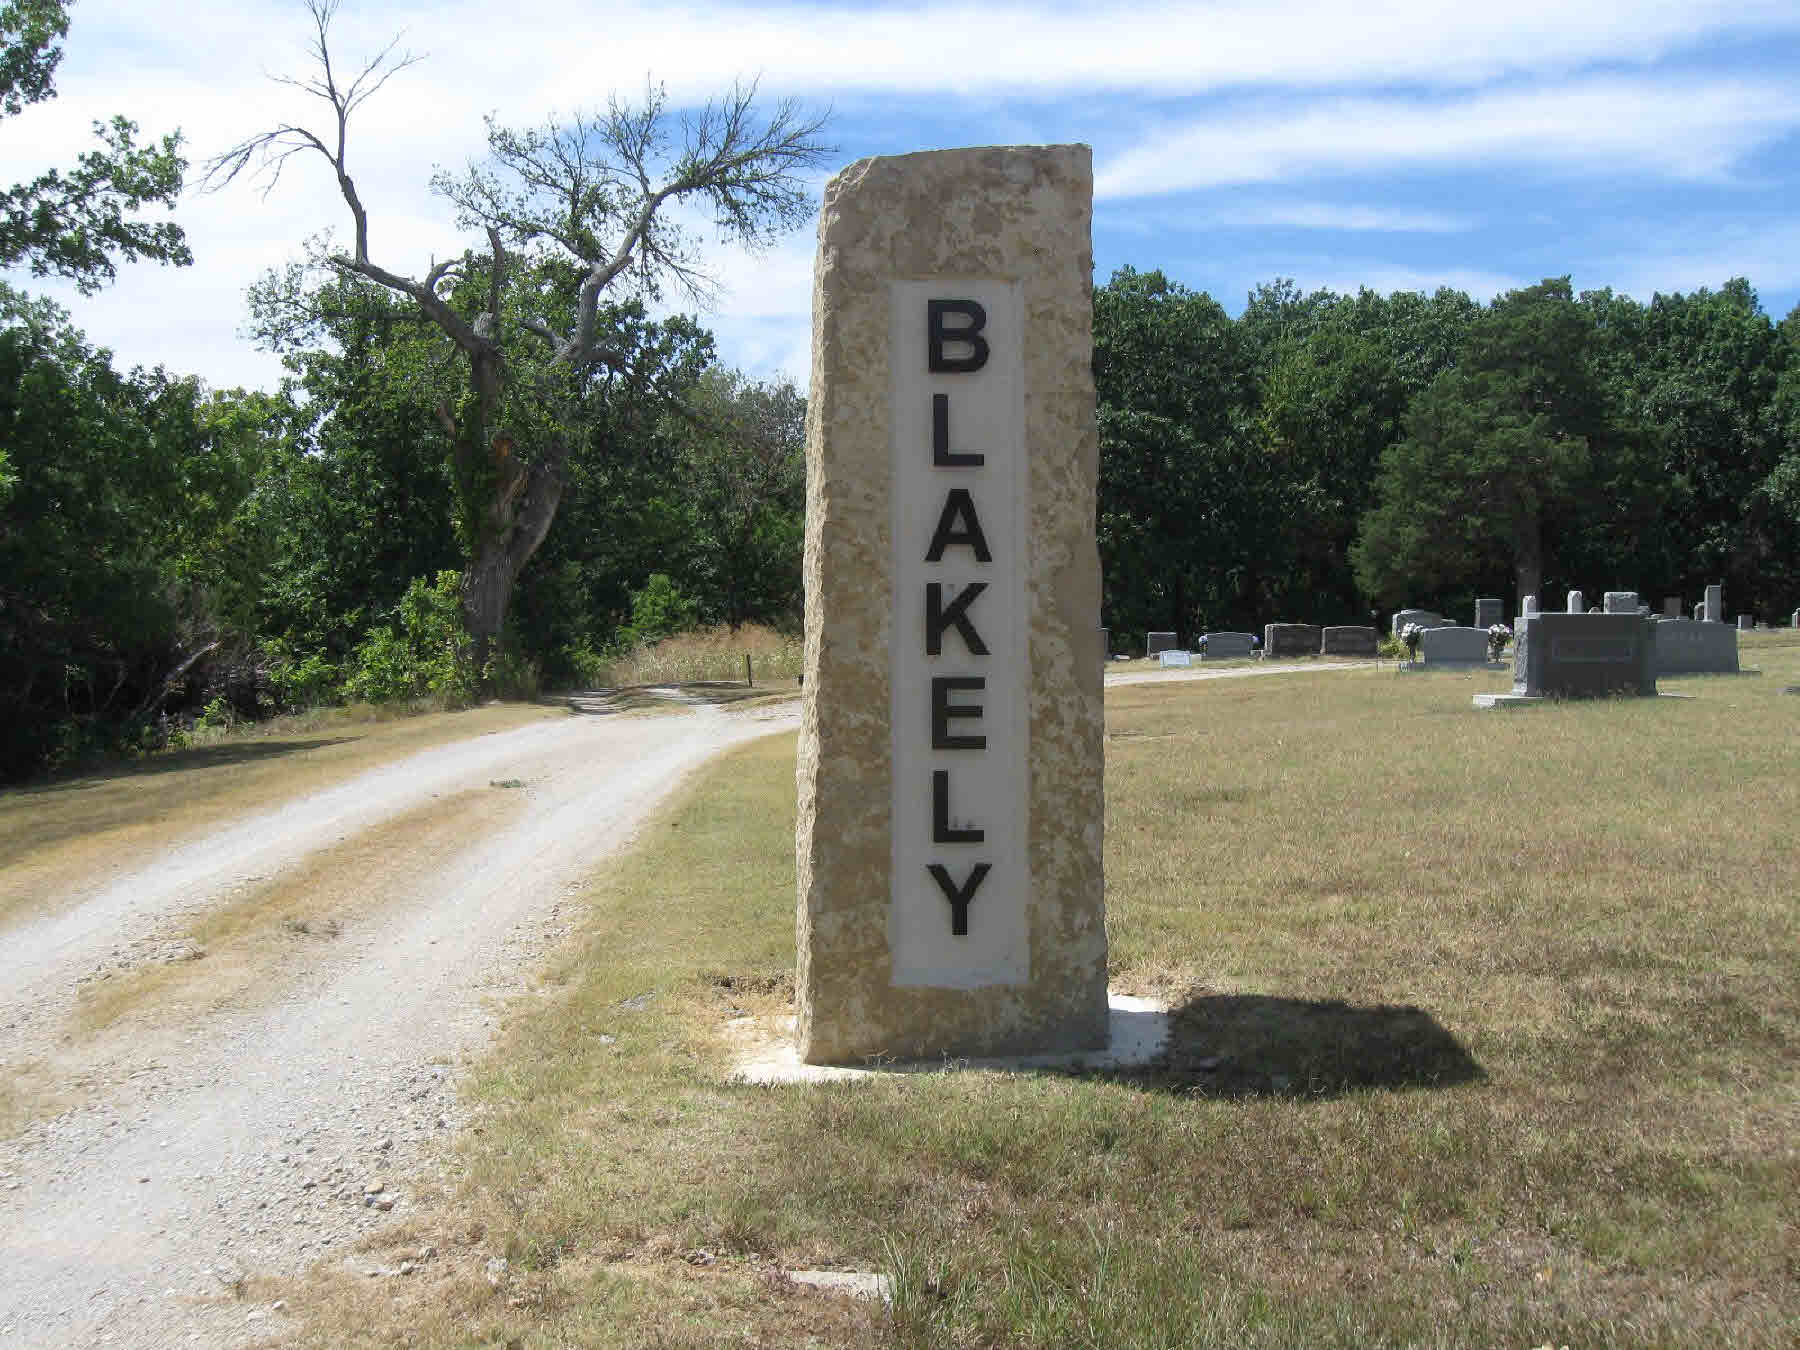 Blakely Cemetery